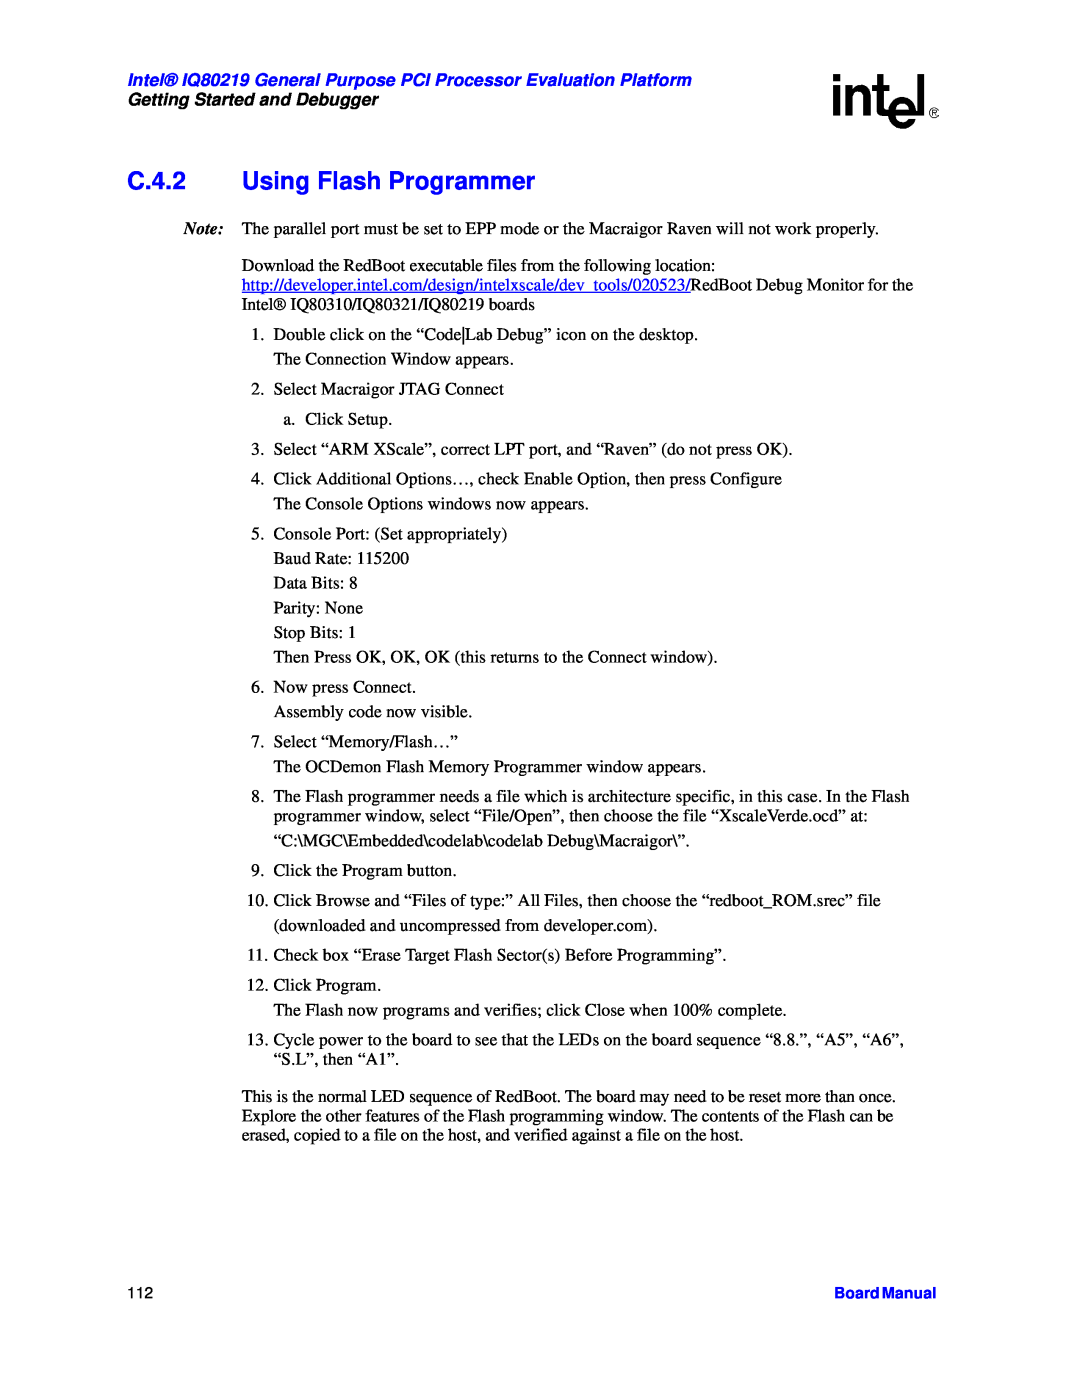 Intel manual C.4.2 Using Flash Programmer, Intel IQ80219 General Purpose PCI Processor Evaluation Platform 